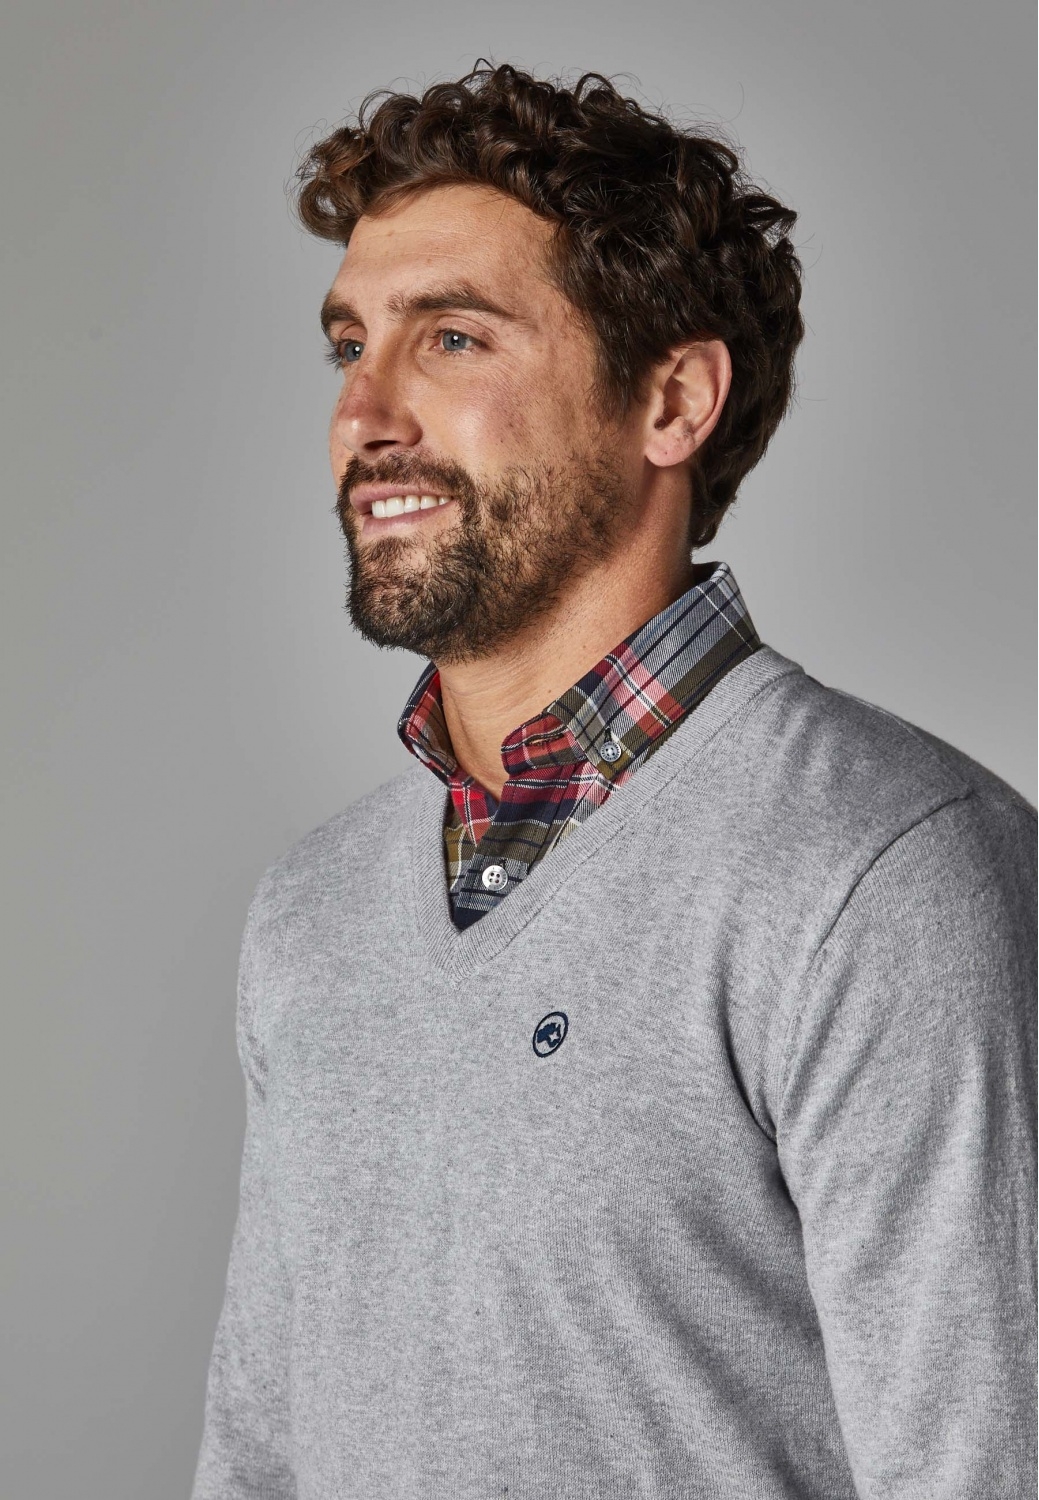 Men's pullover in grey colour with V-neck Altonadock